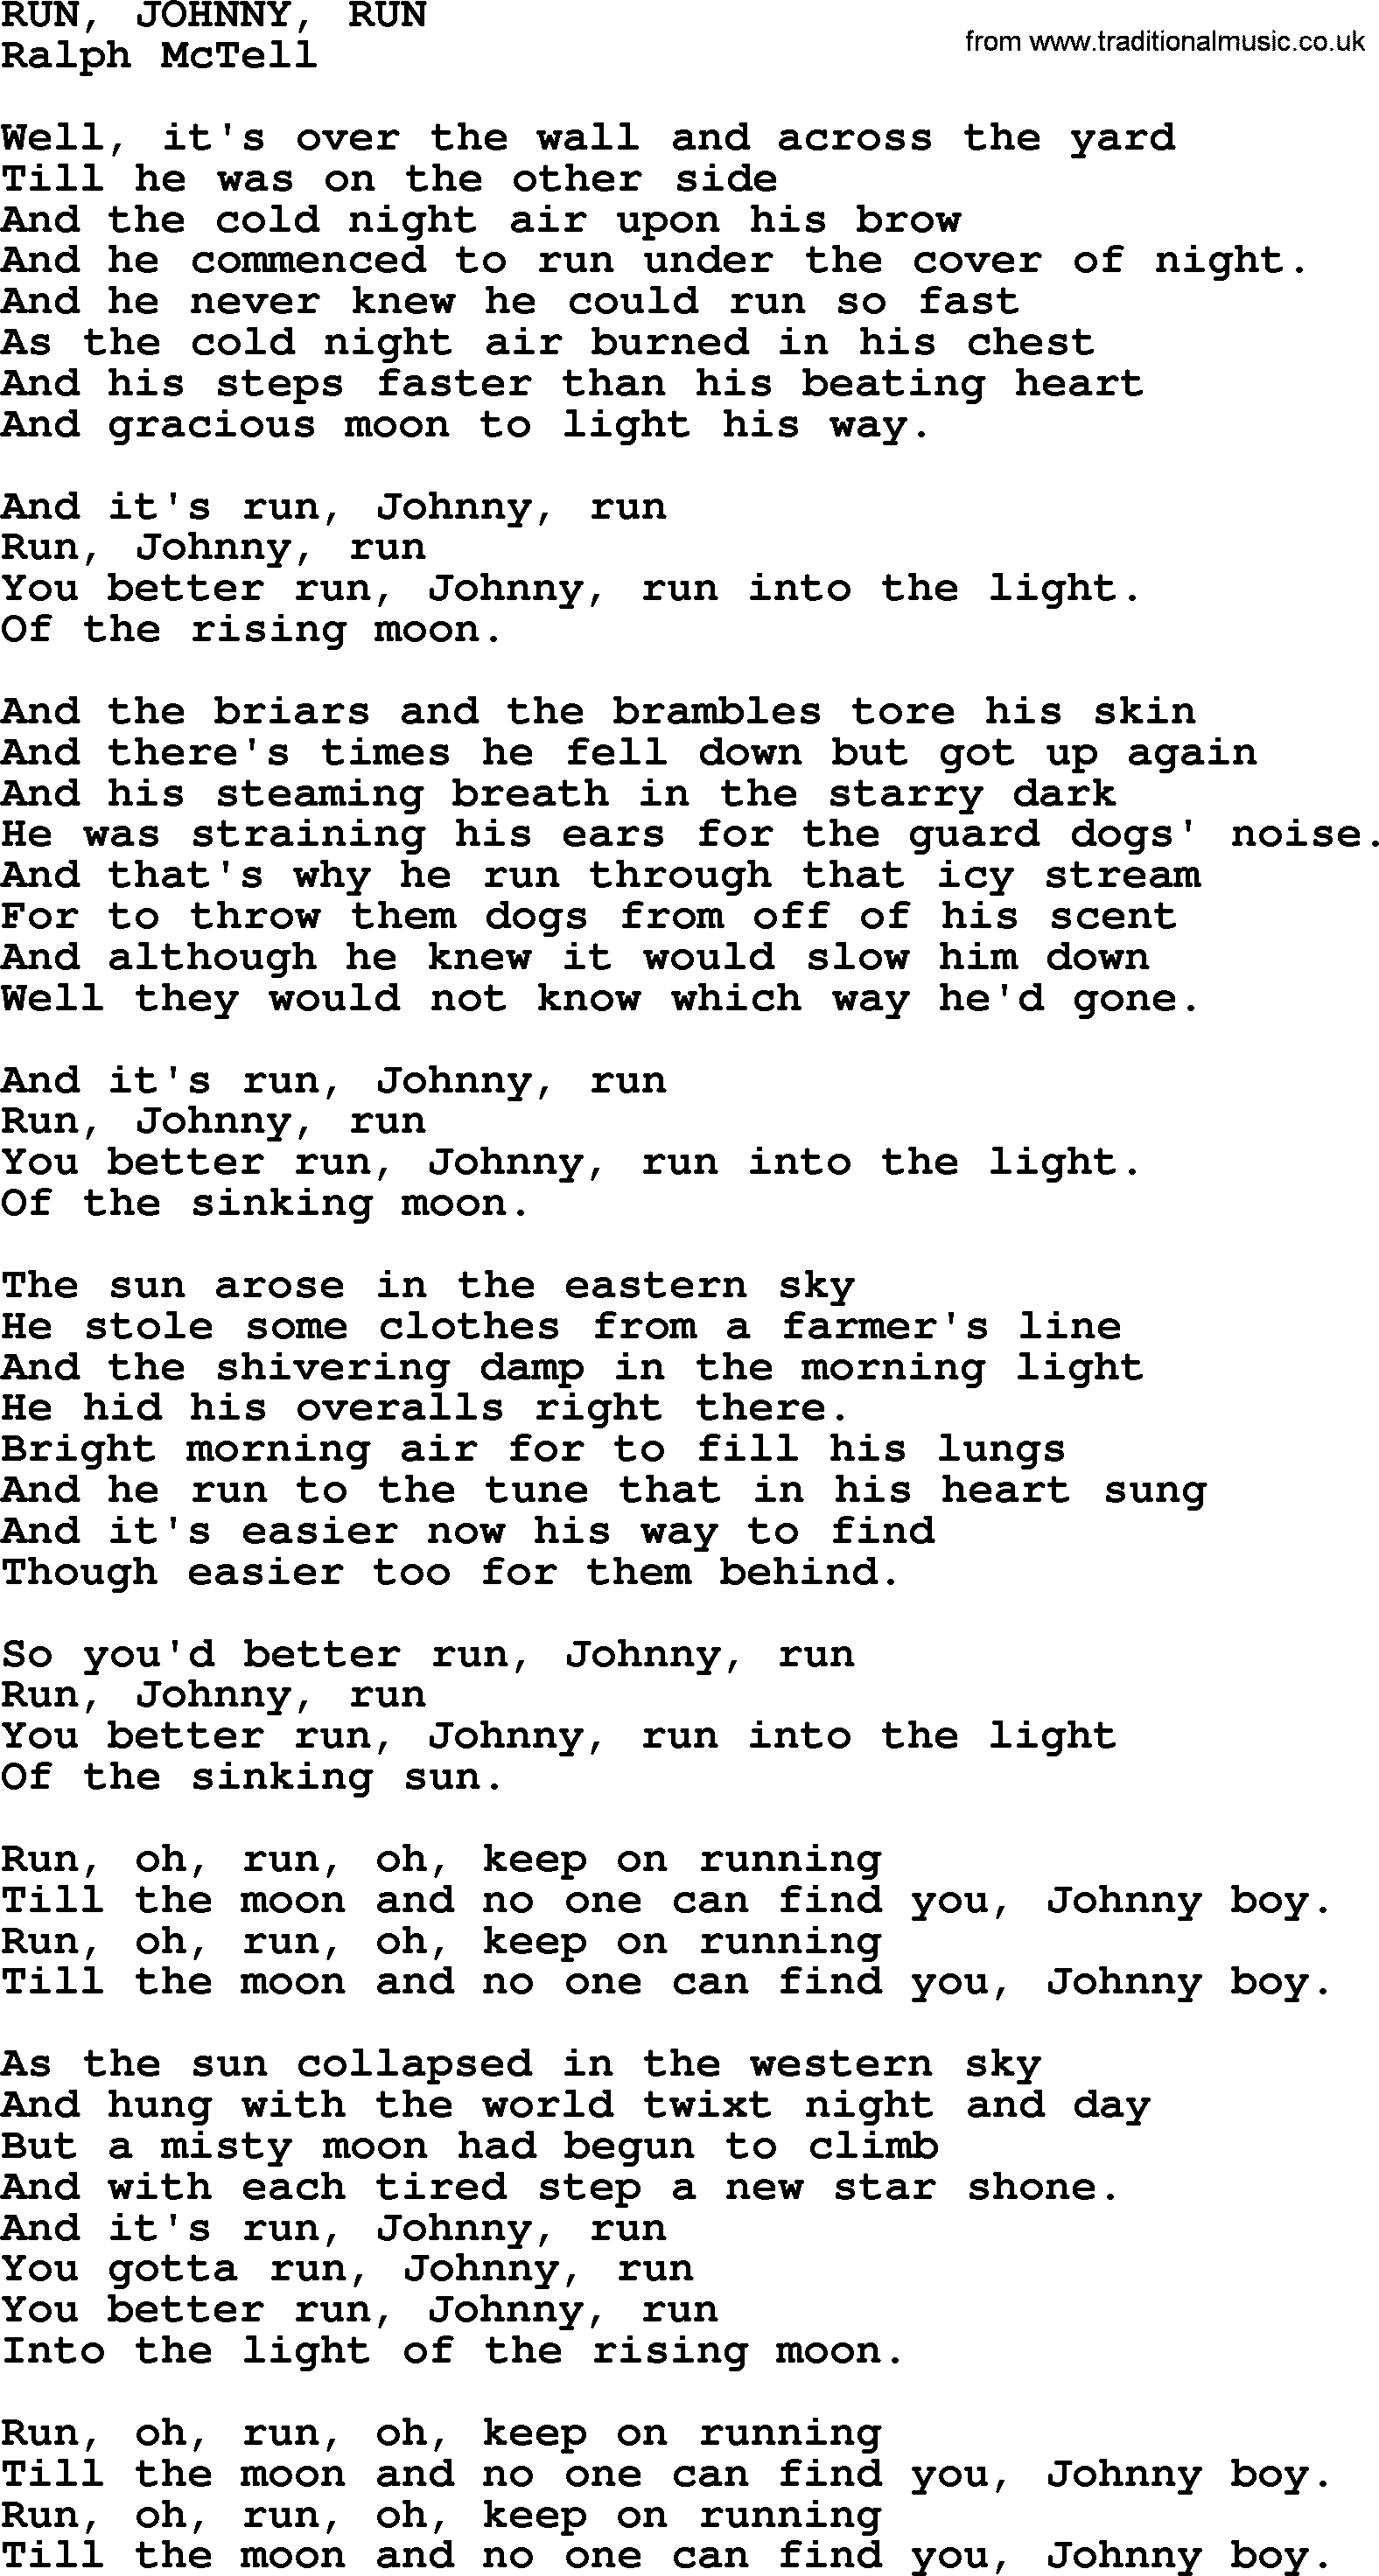 Ralph McTell Song: Run, Johnny, Run, lyrics